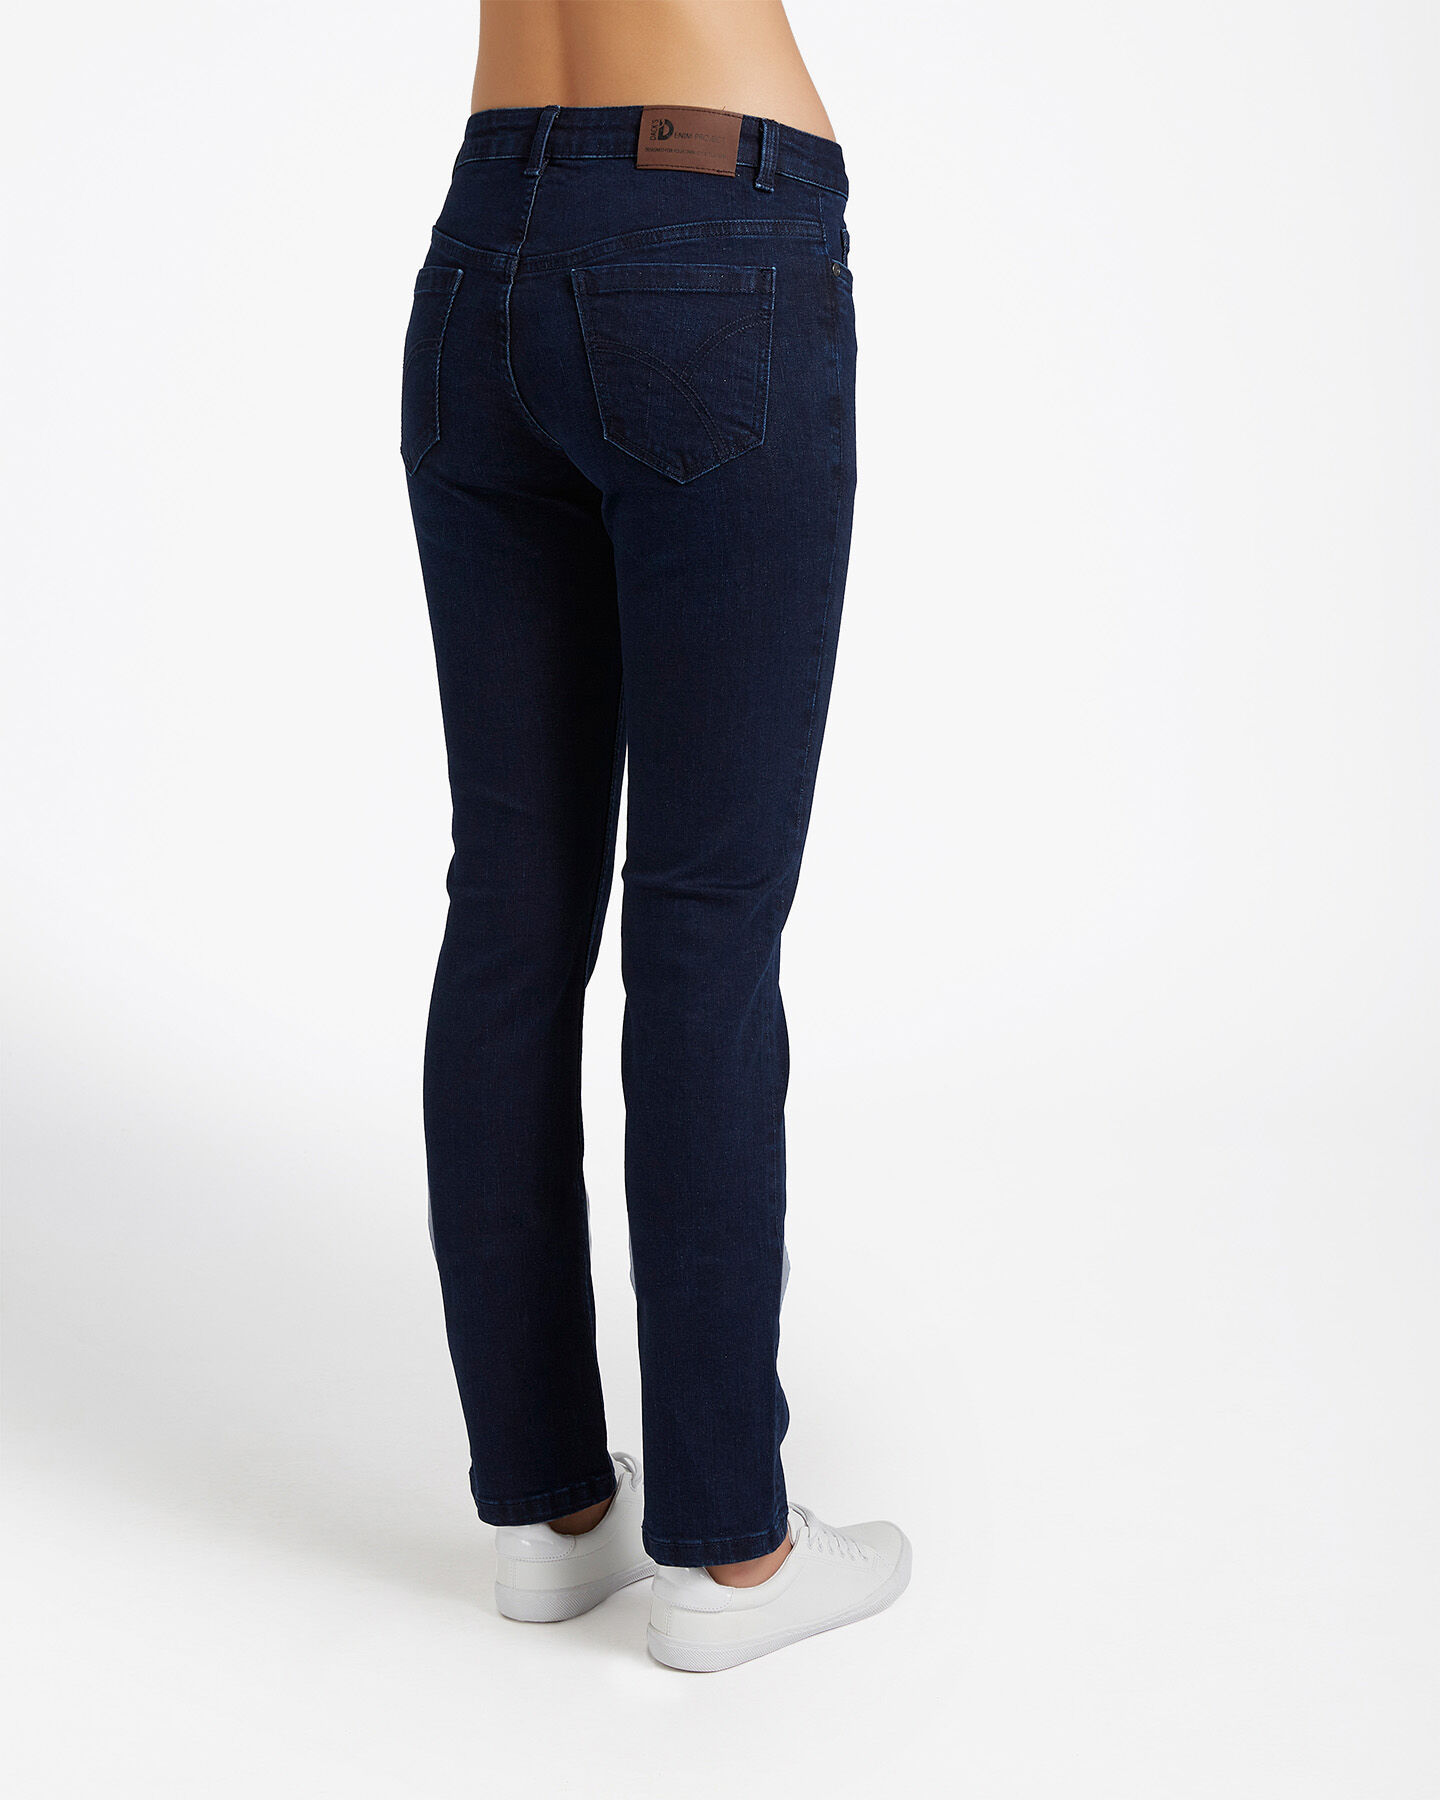  Jeans DACK'S REGULAR W S4080192|DD|40 scatto 1